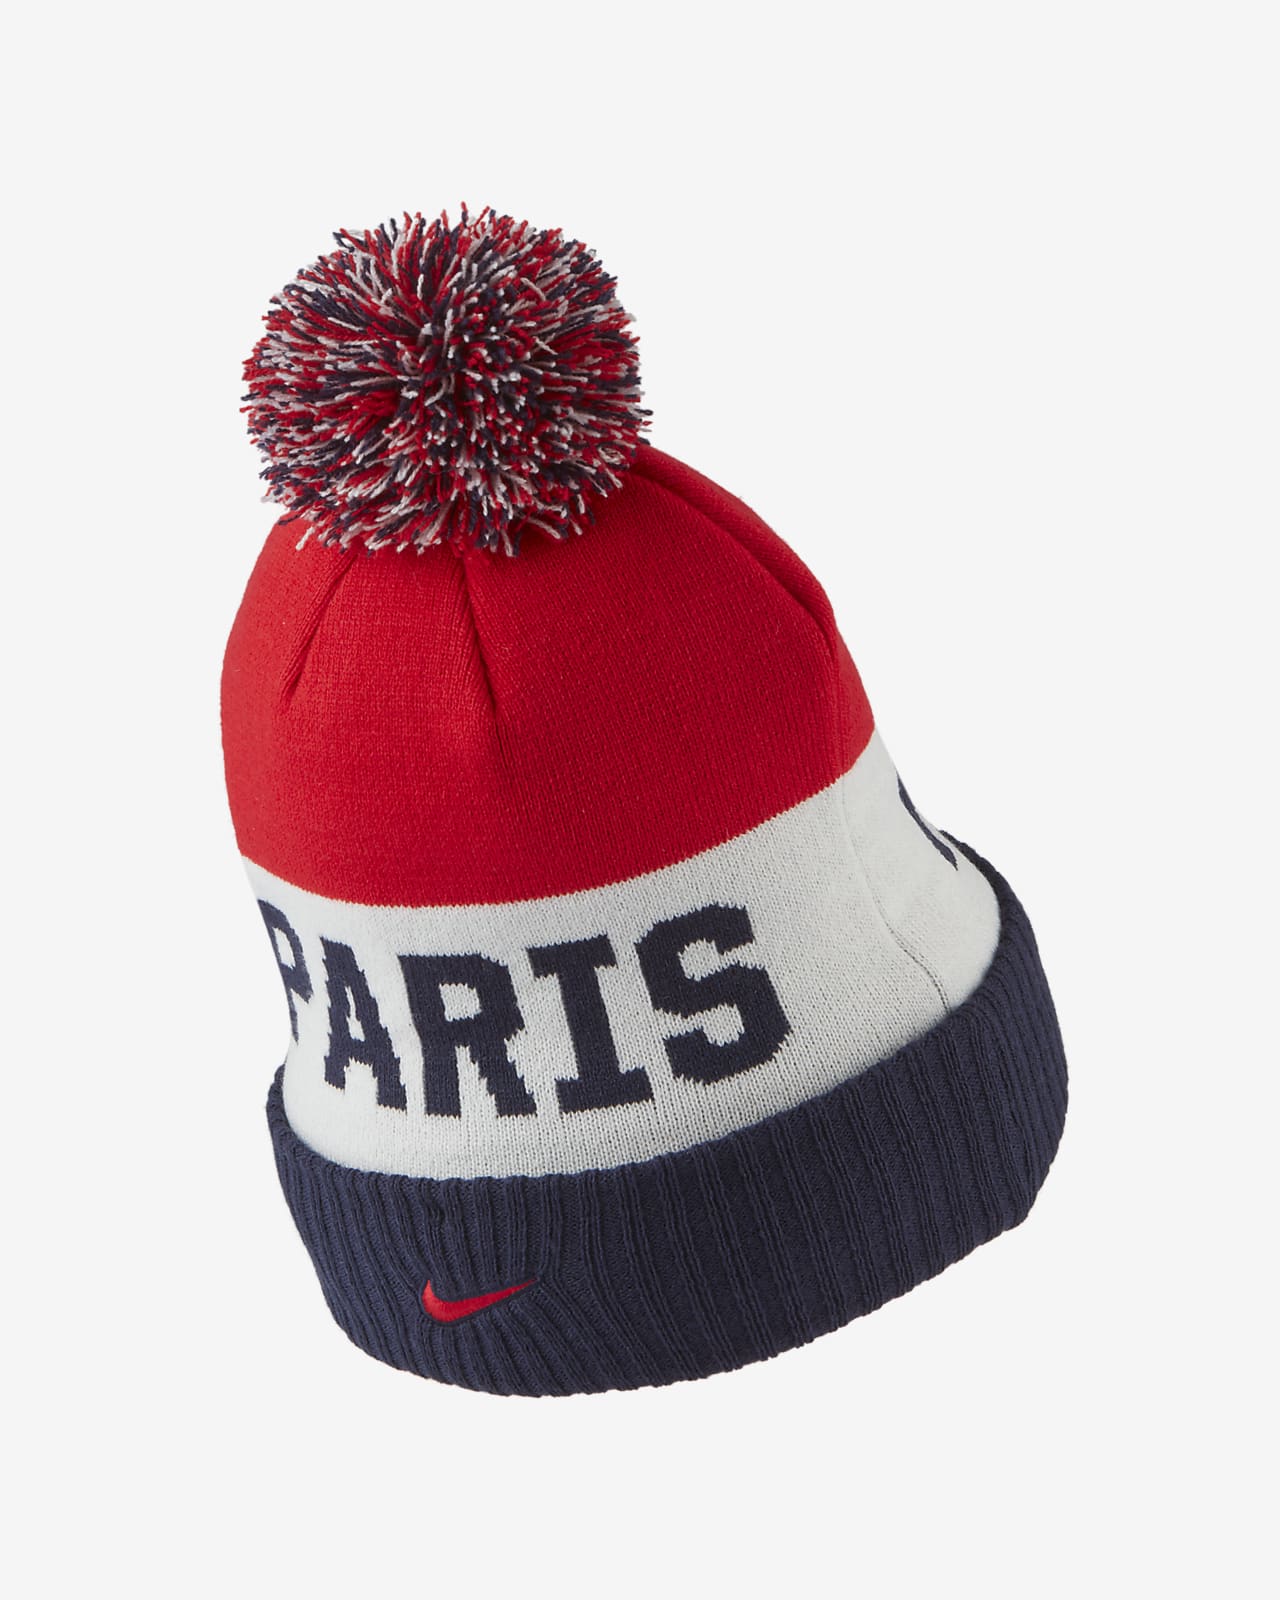 Ligeramente Concurso lamentar Gorro con pompón París Saint-Germain. Nike.com